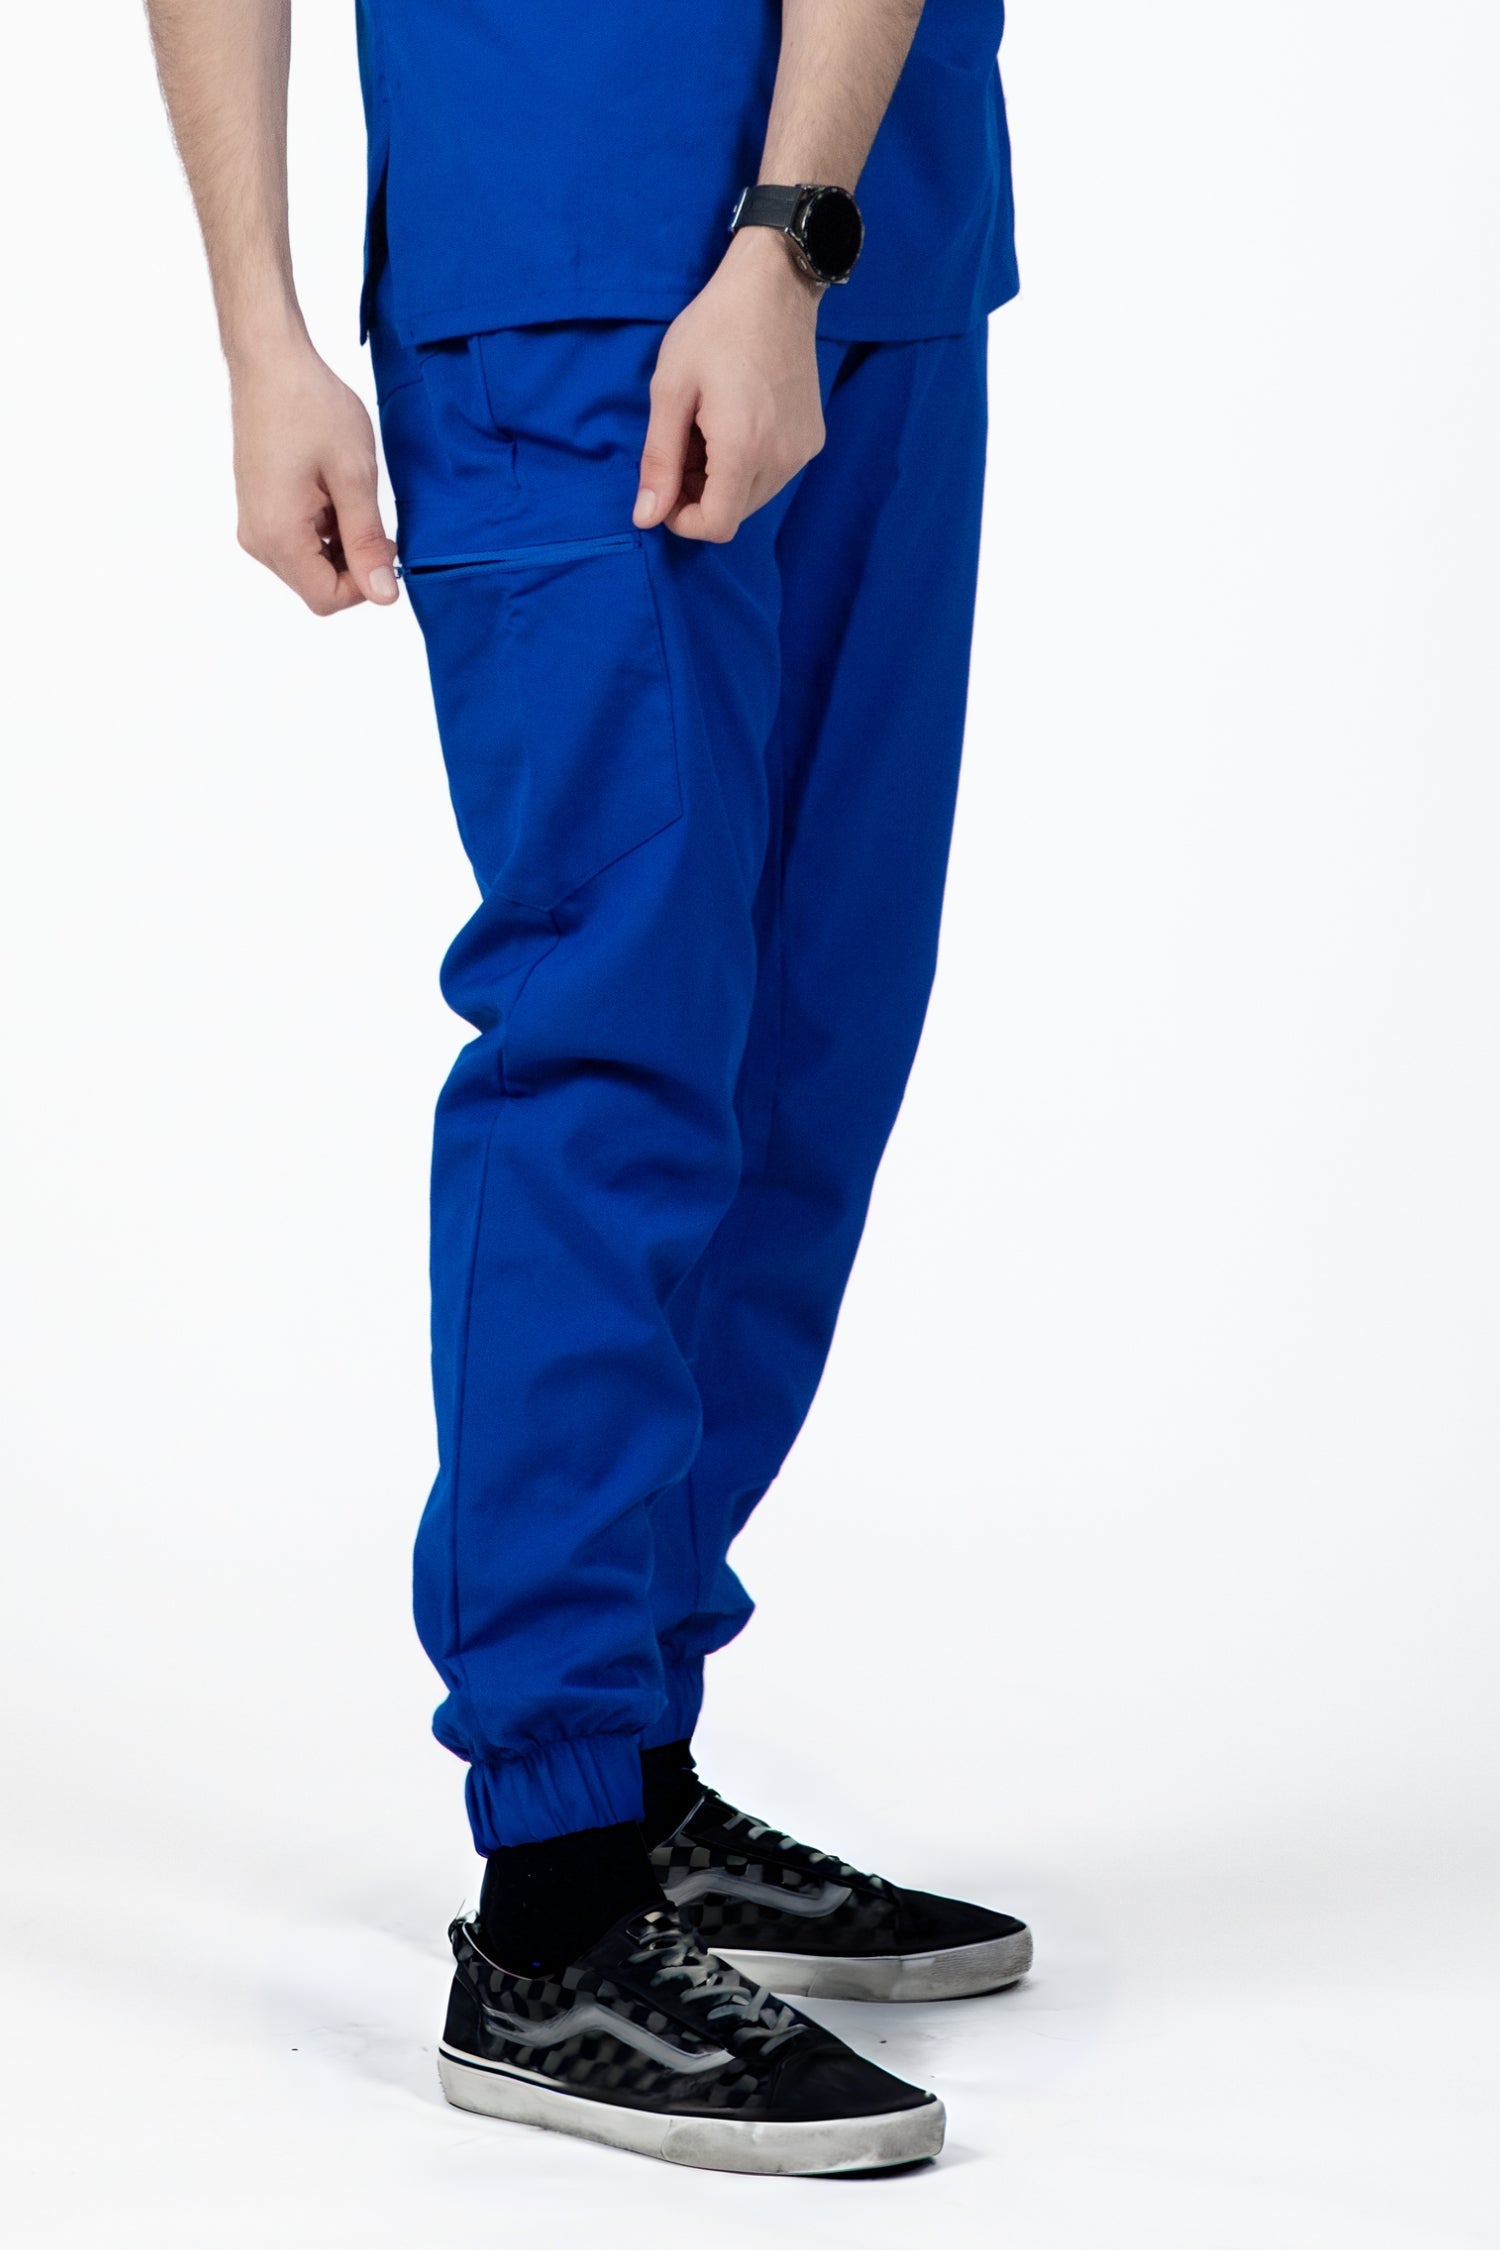 Homme en bleu, portant pantalon médical Slimfit - Bleu royal; tenues médicales élégantes